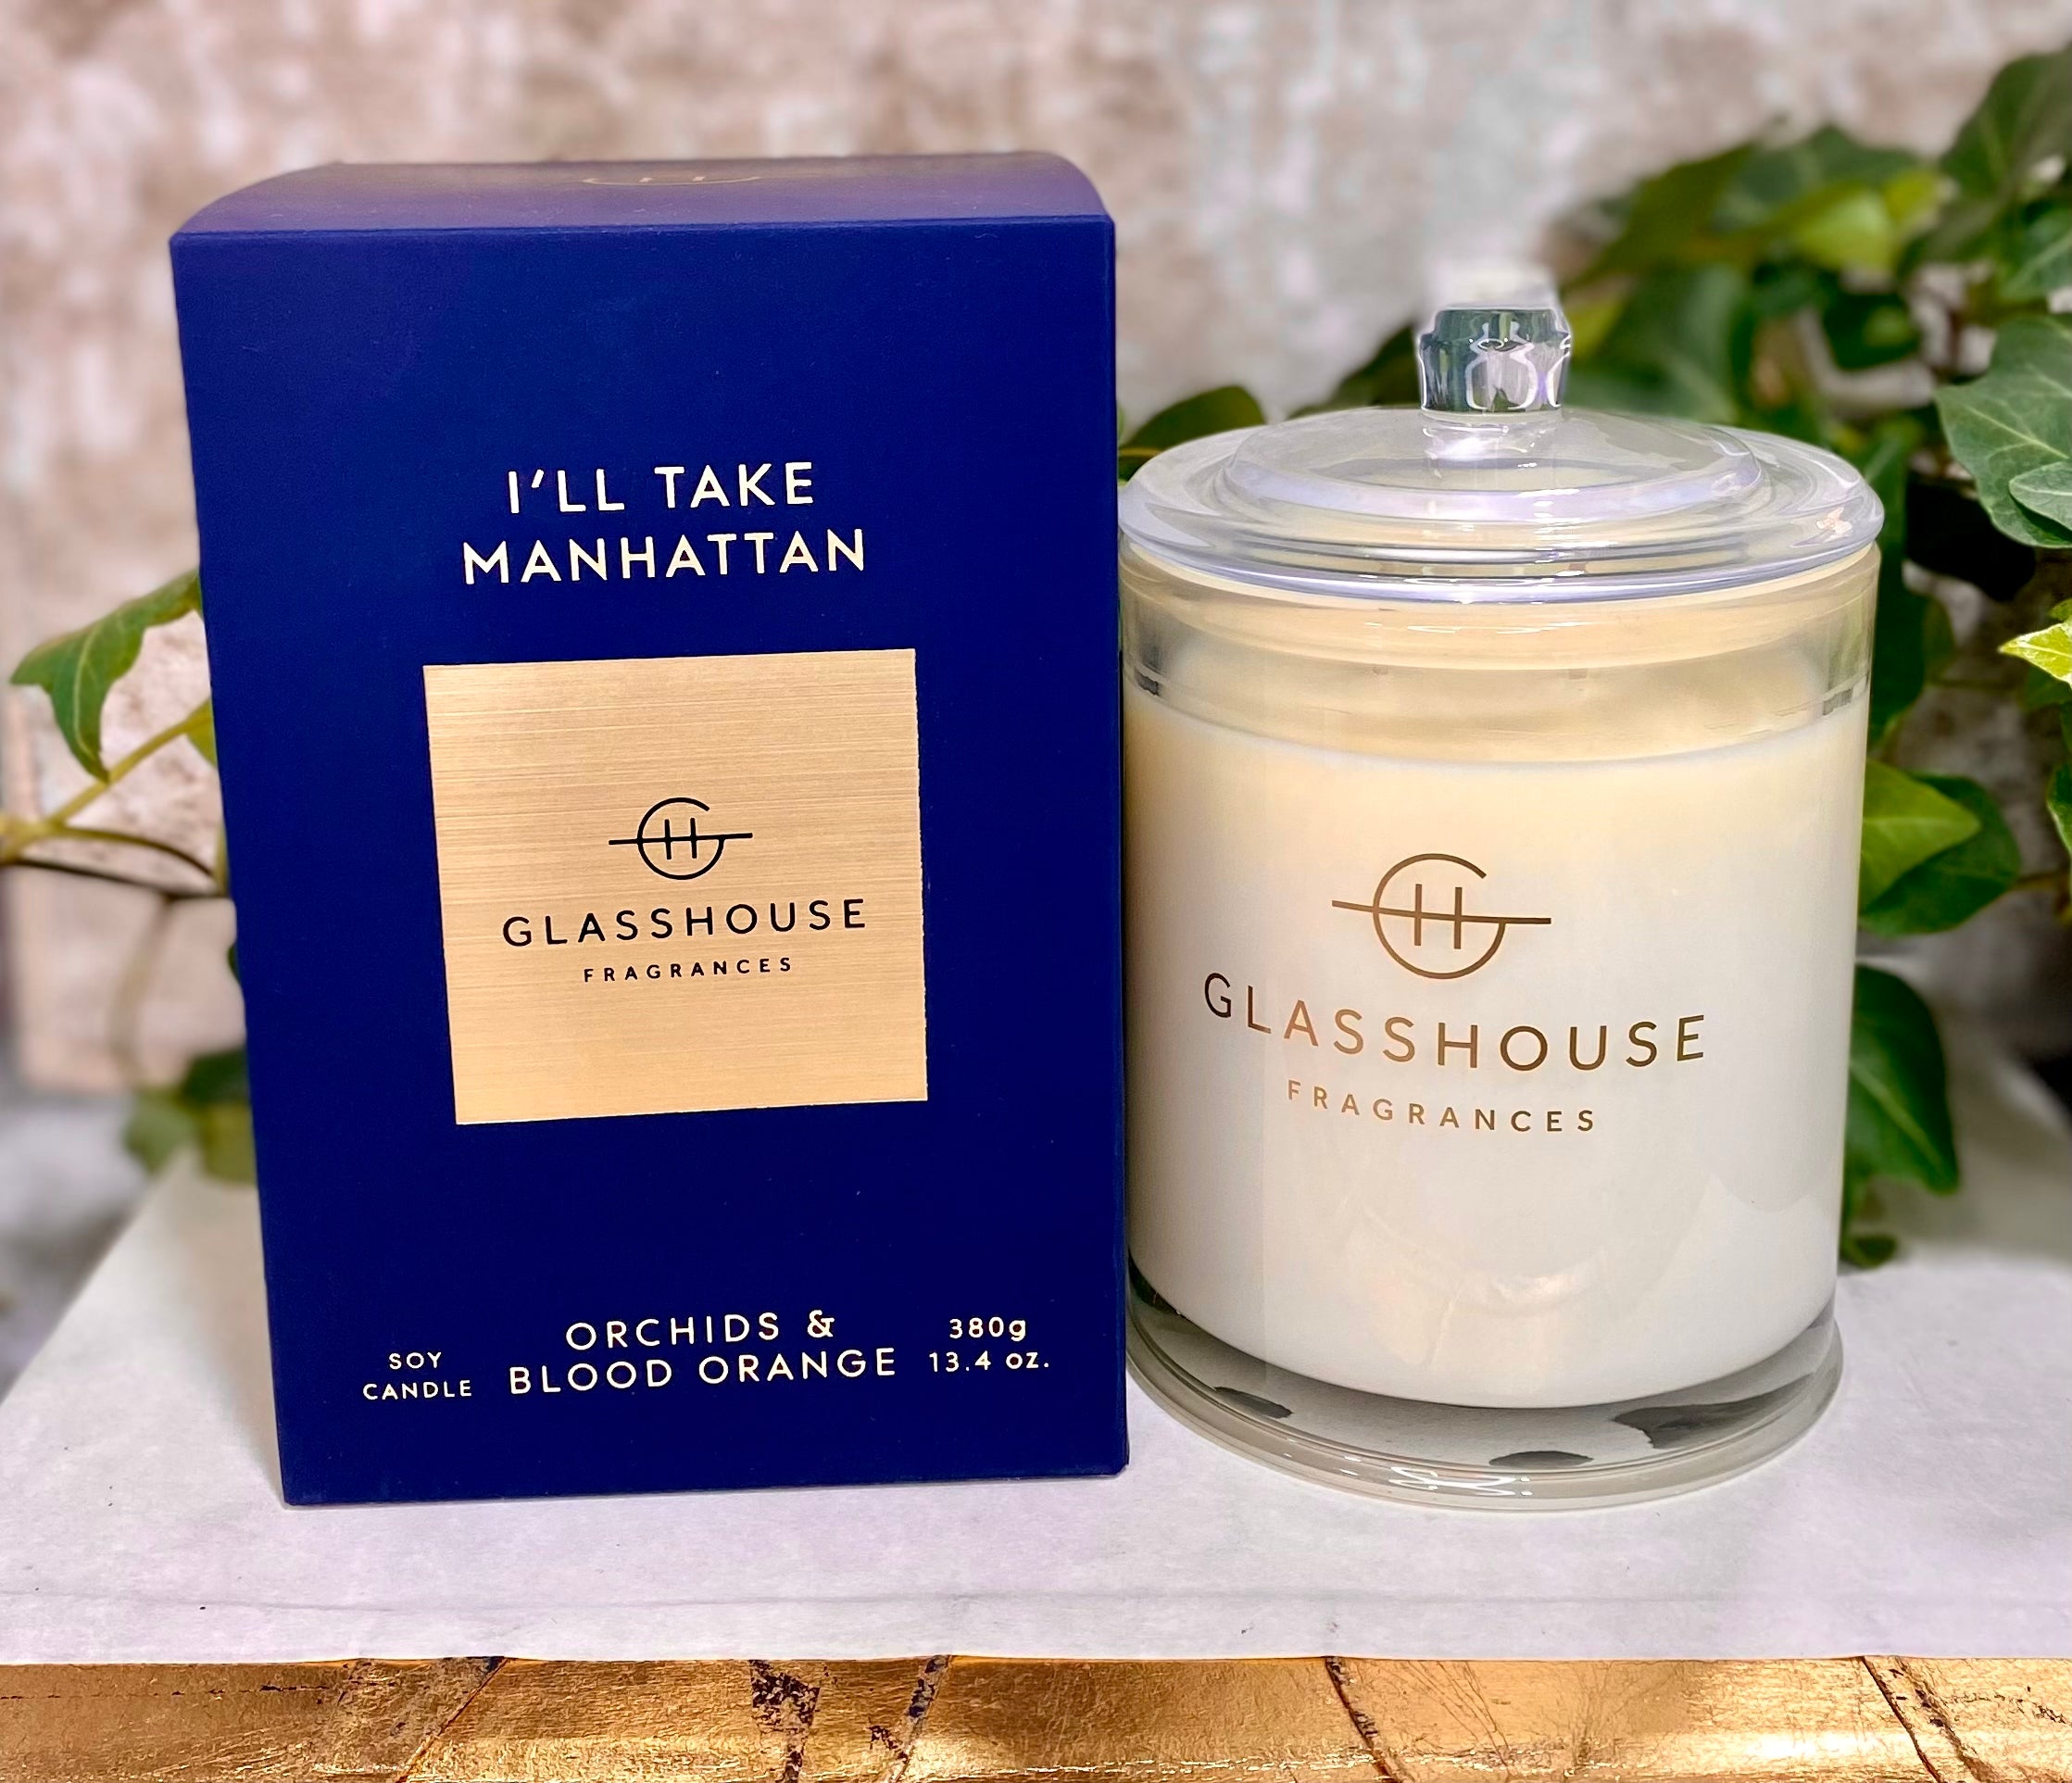 Glasshouse “I'll Take Manhattan” candle 13.4 oz.